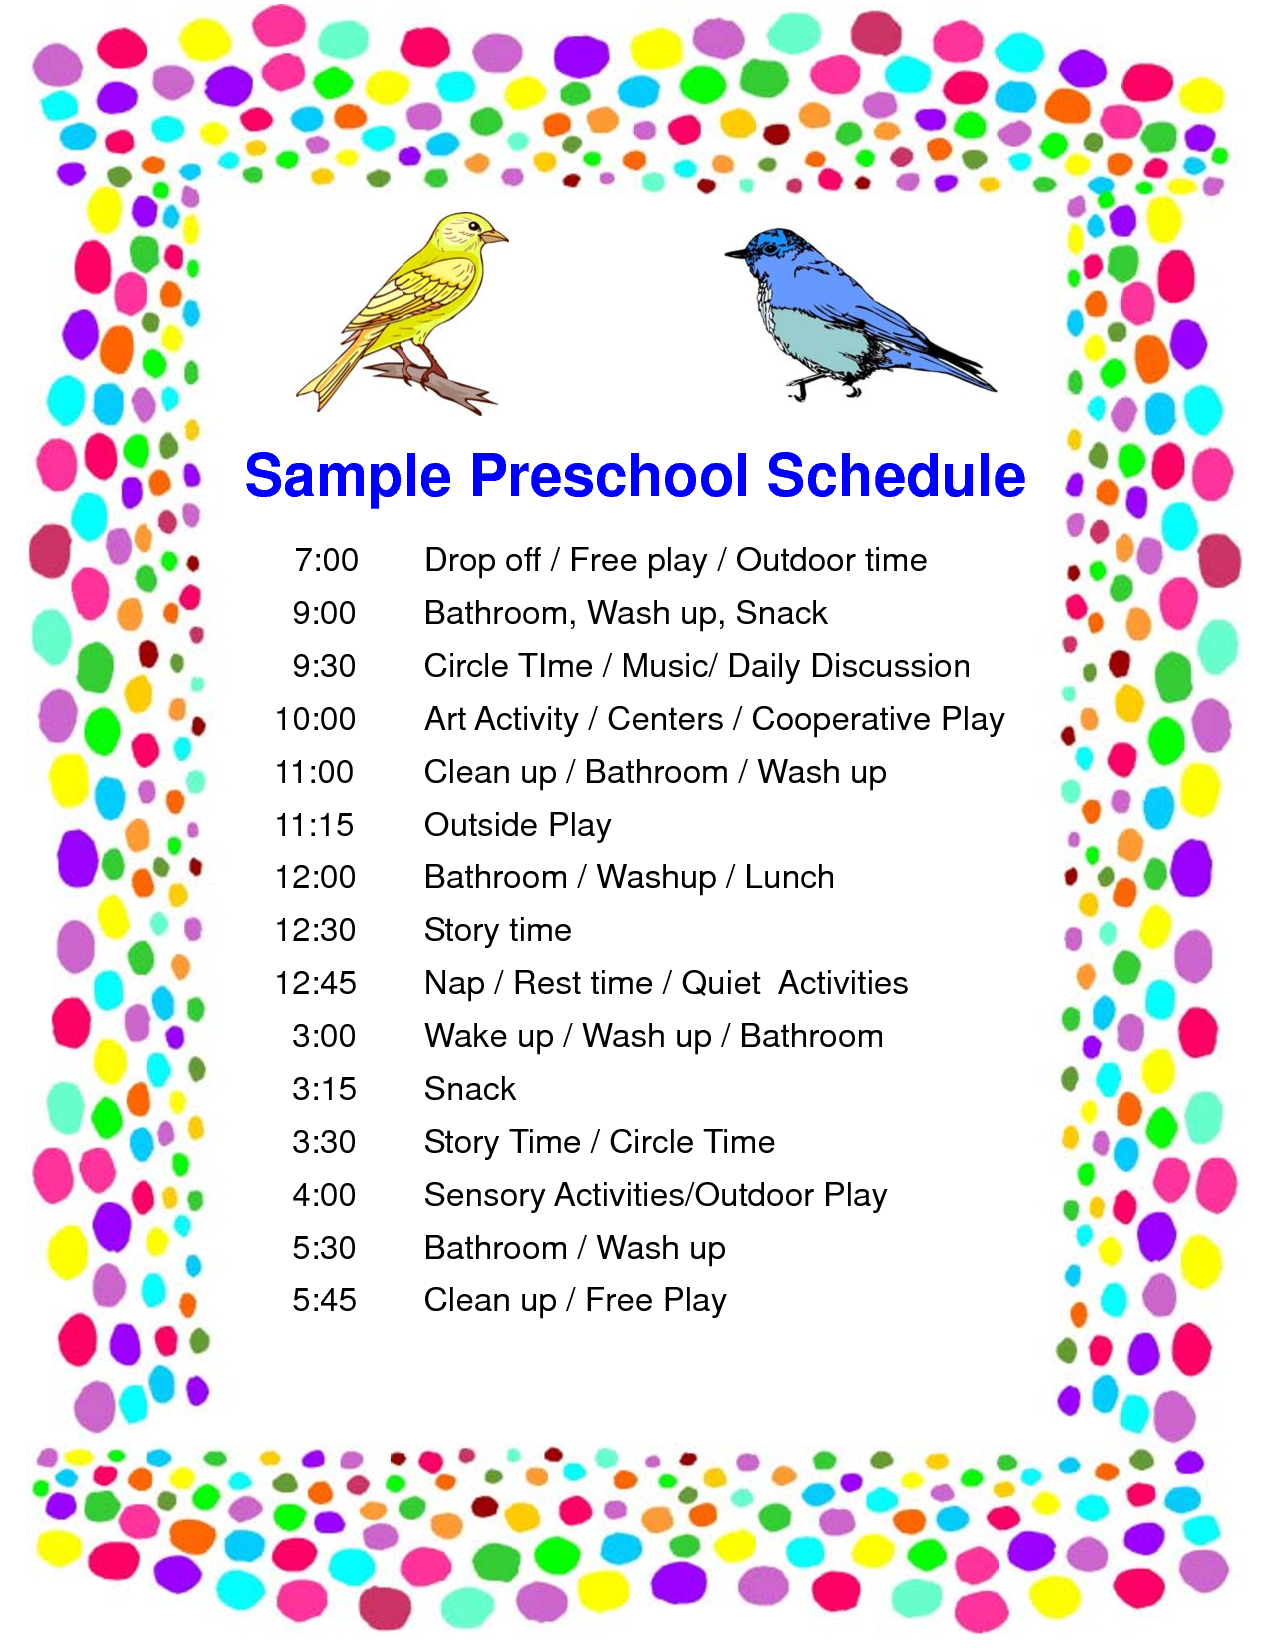 Daily Schedule For Preschool Classroom